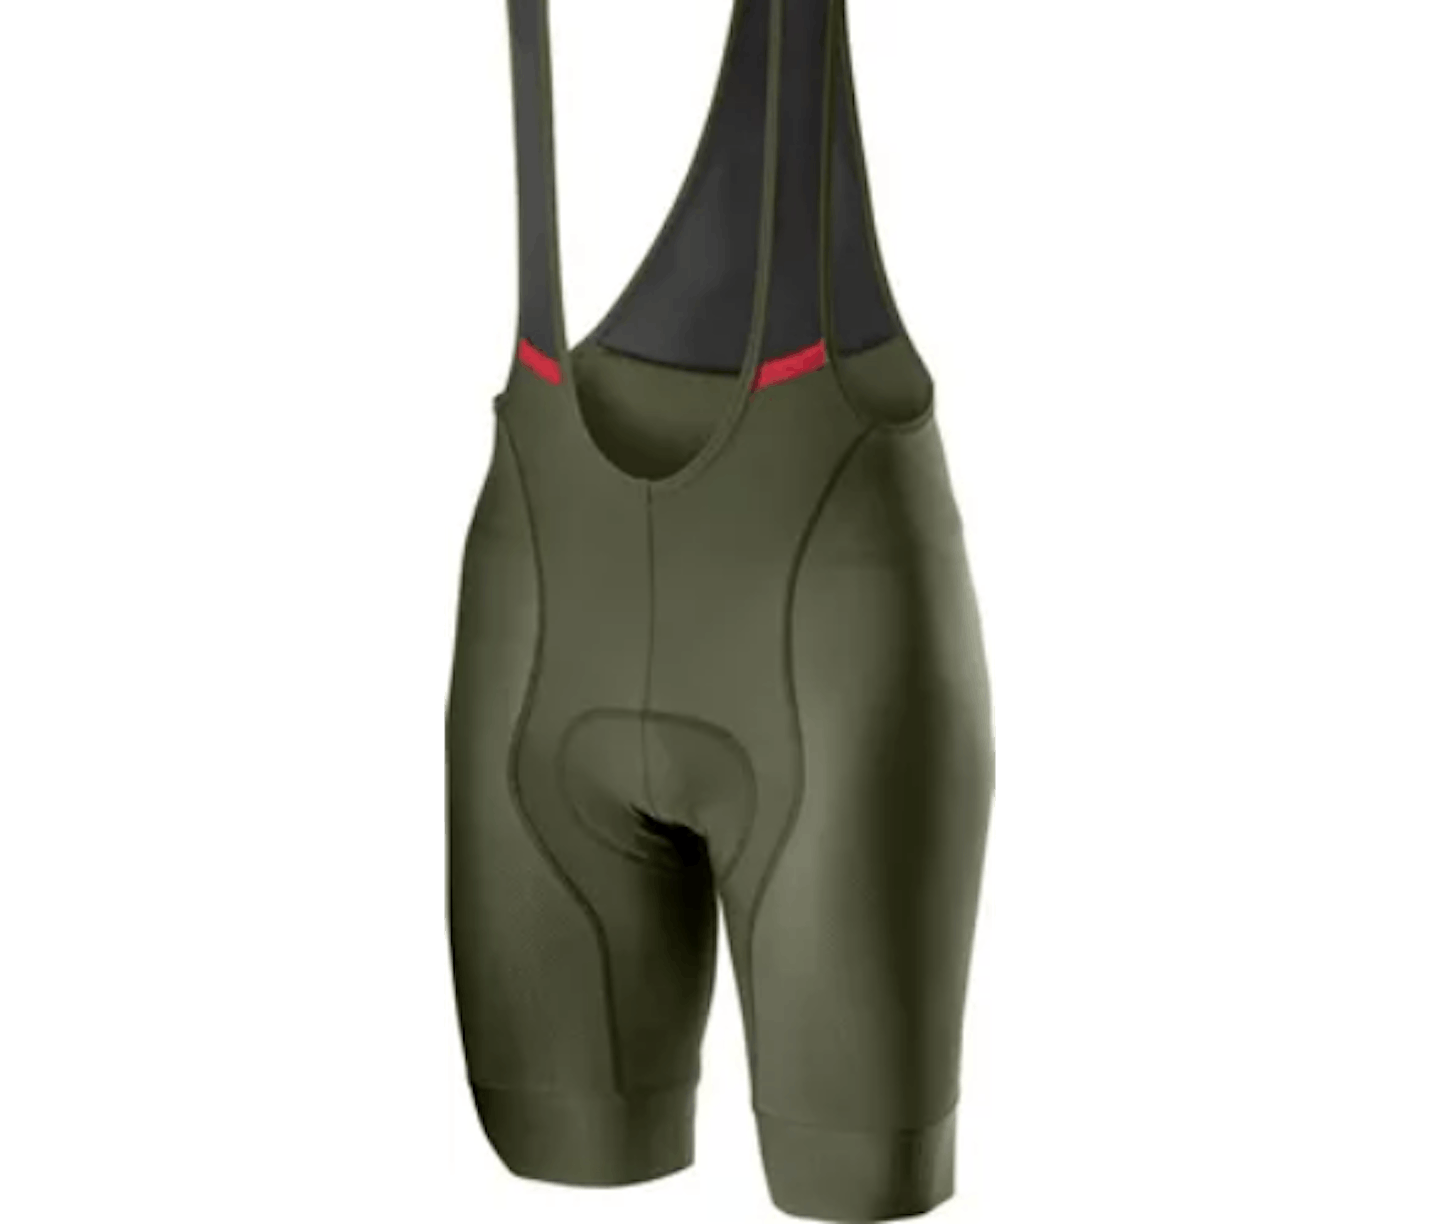 Castelli Competizione bib shorts